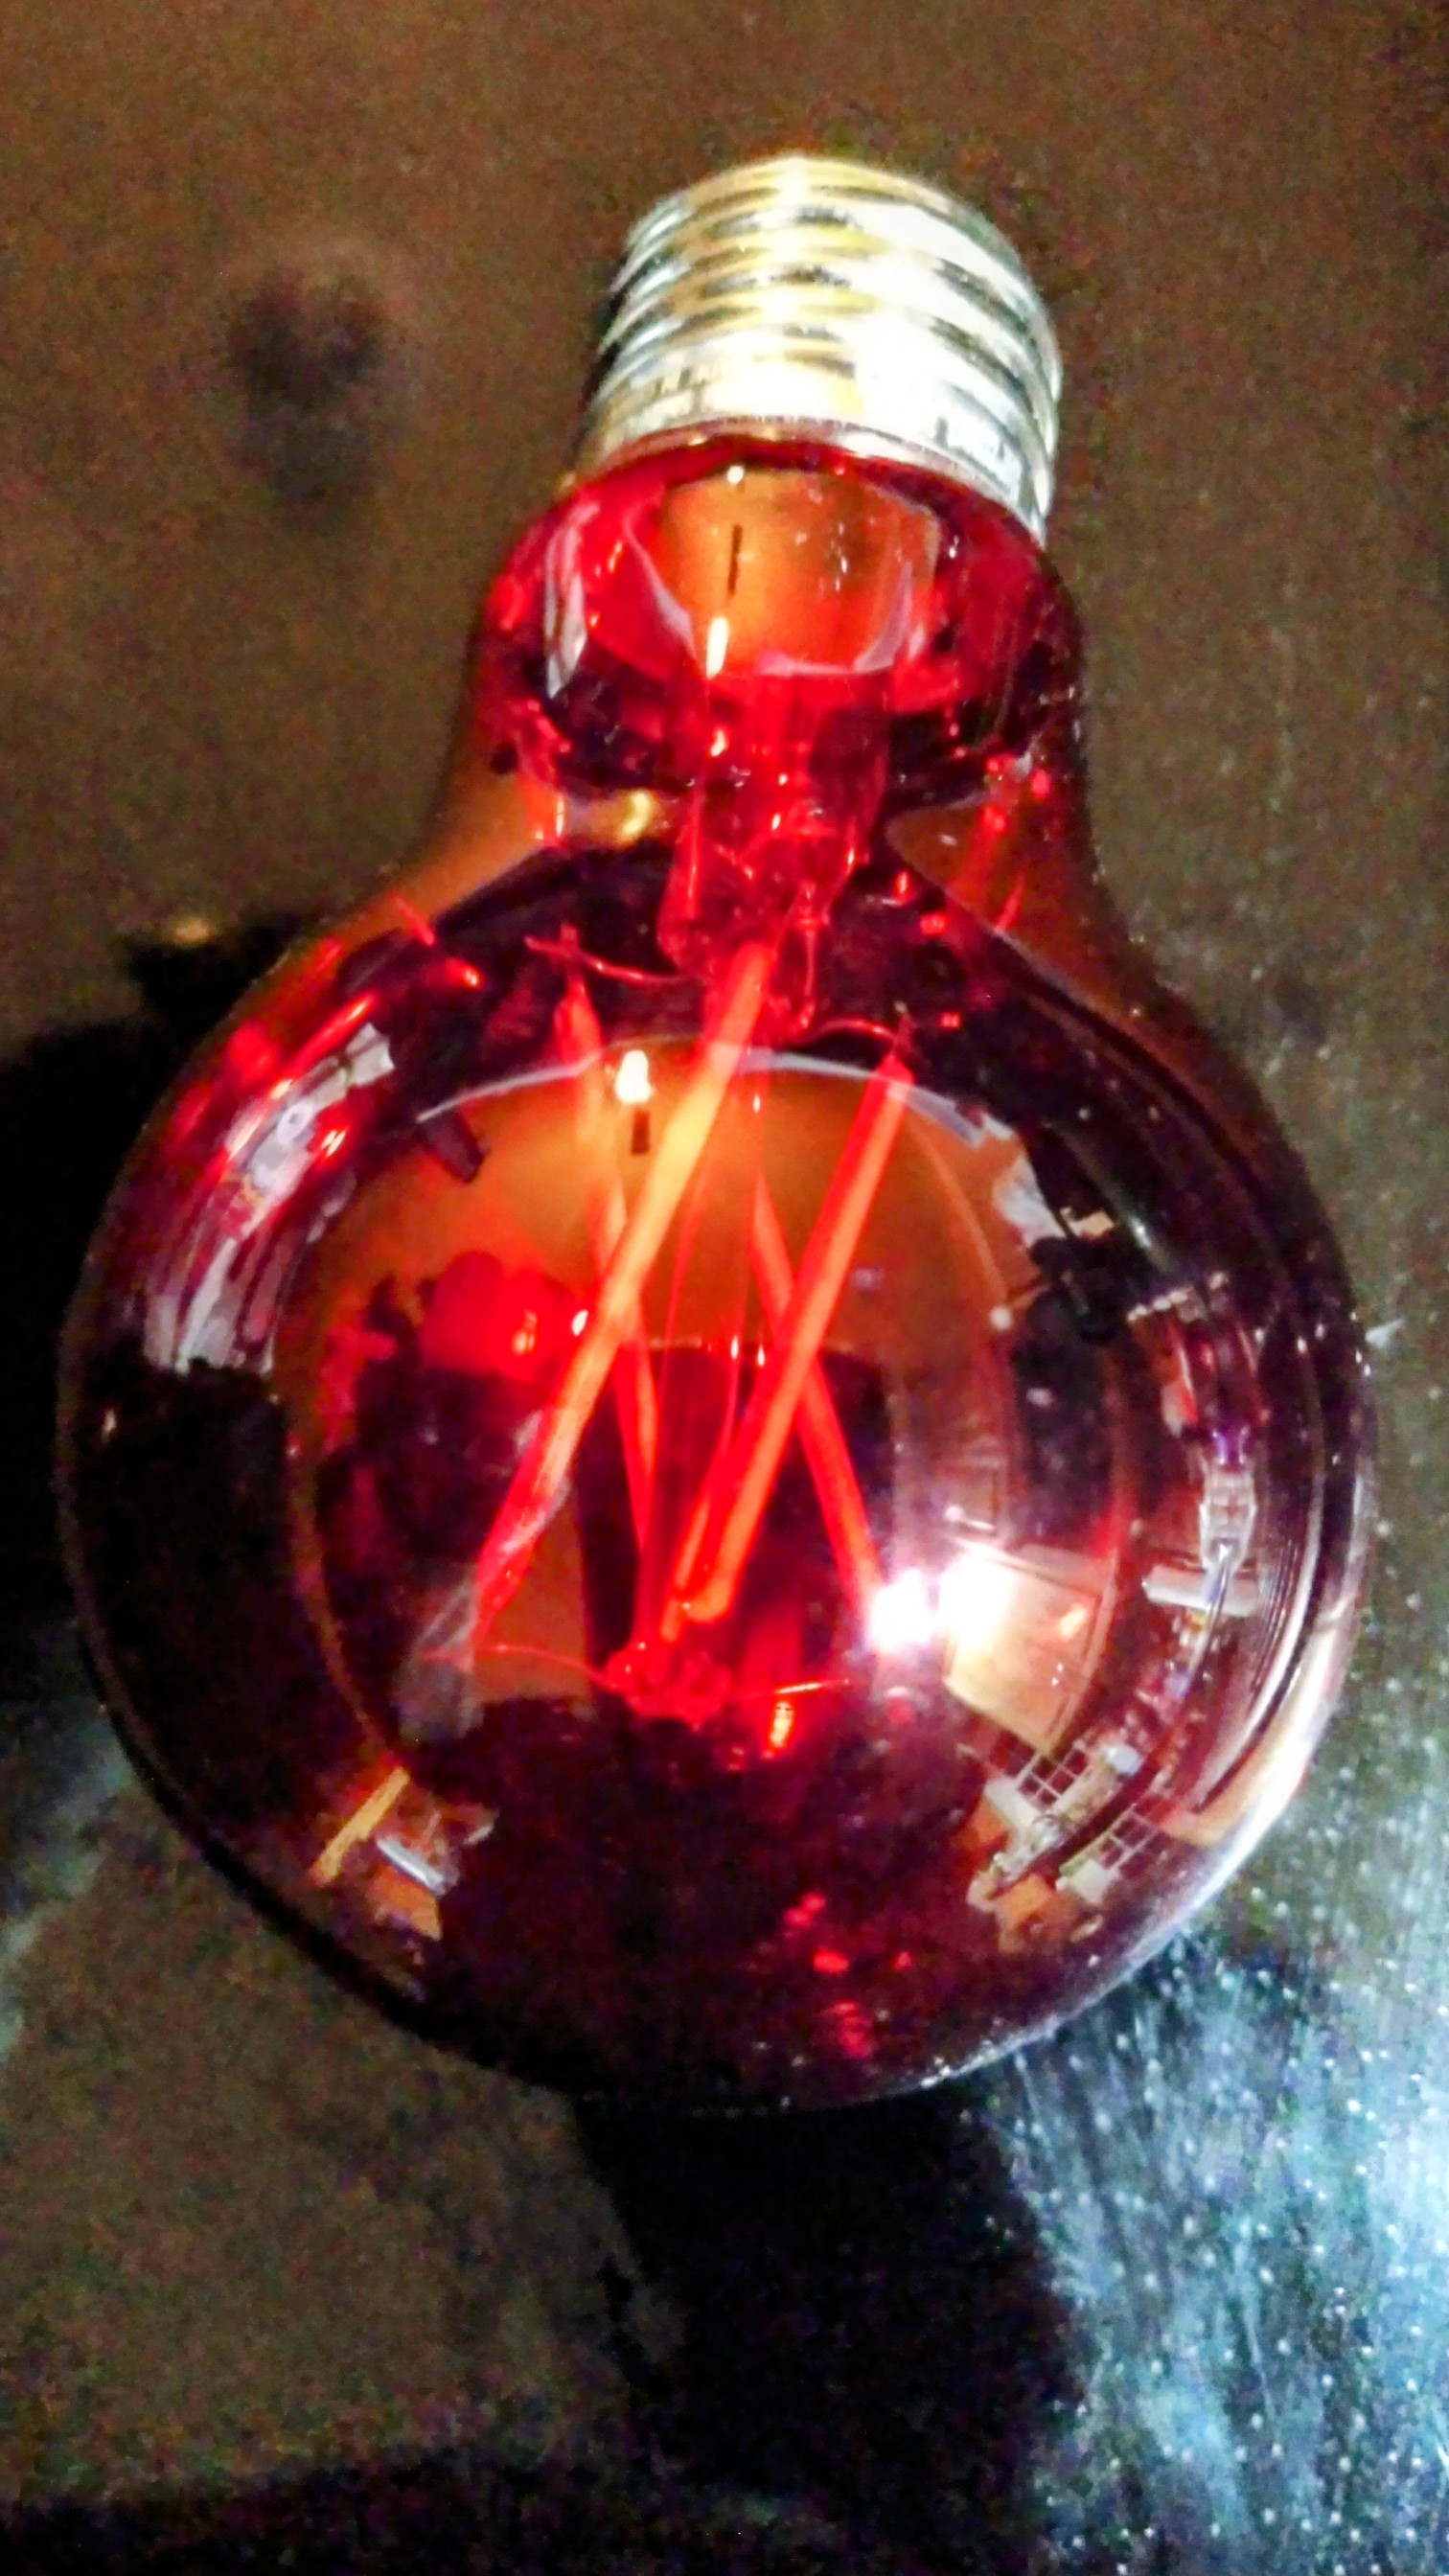 A close-up photo shows a red lightbulb.